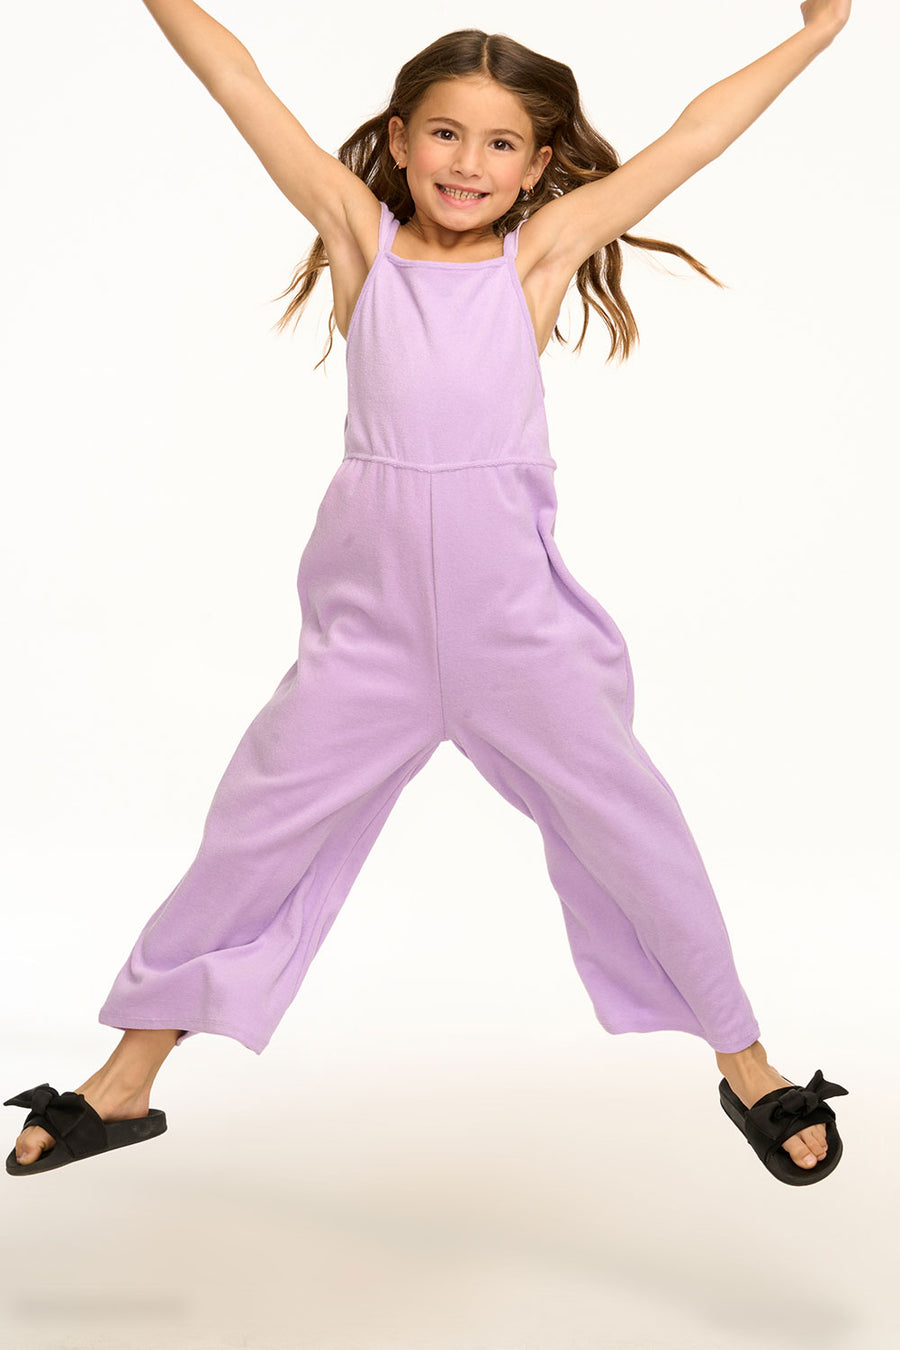 Monterey Digital Lavender Jumpsuit GIRLS chaserbrand